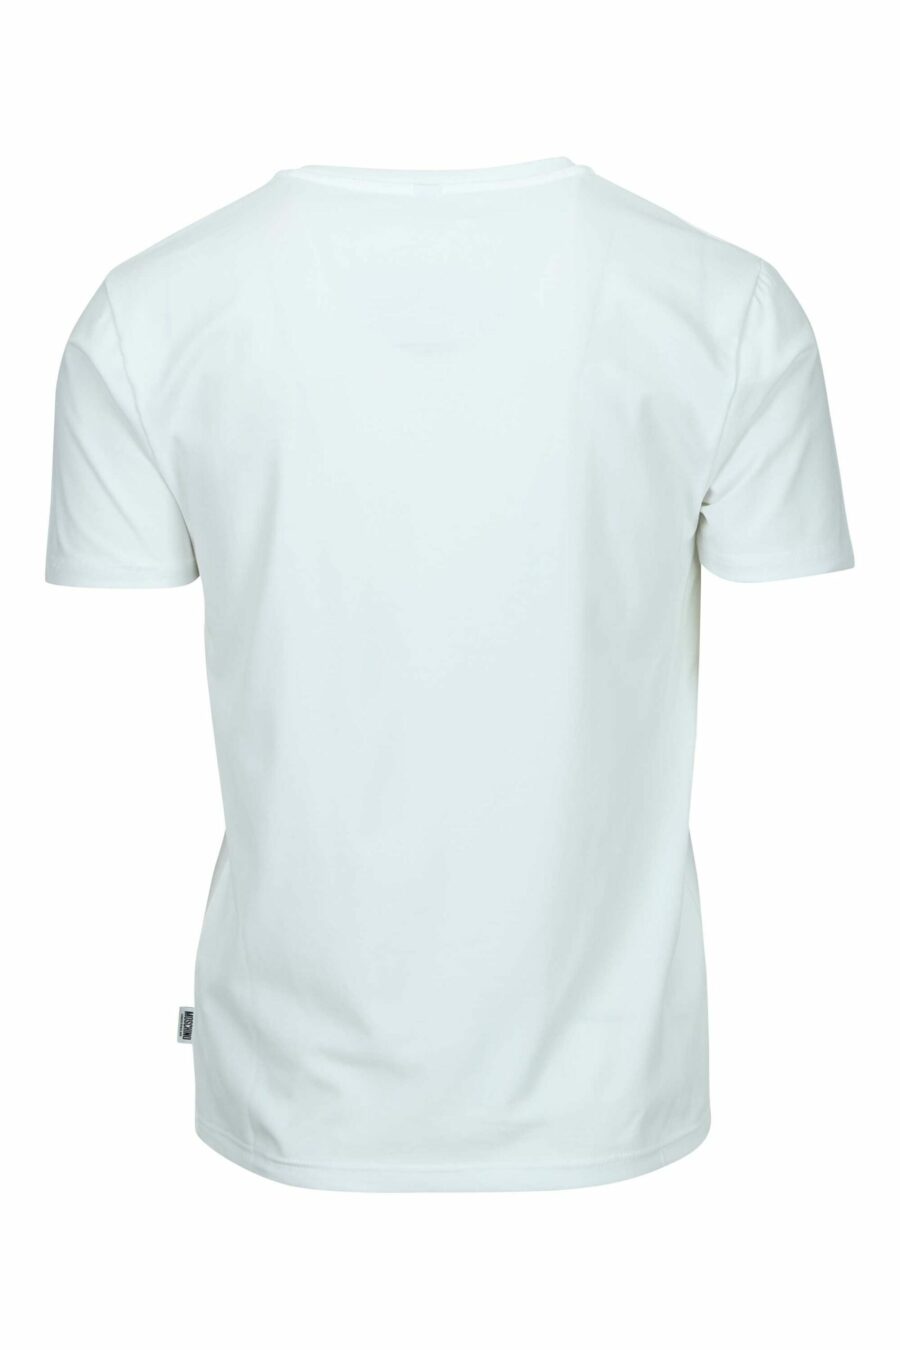 T-shirt blanc avec mini logo patch ours "underbear" - 667113605678 1 scaled